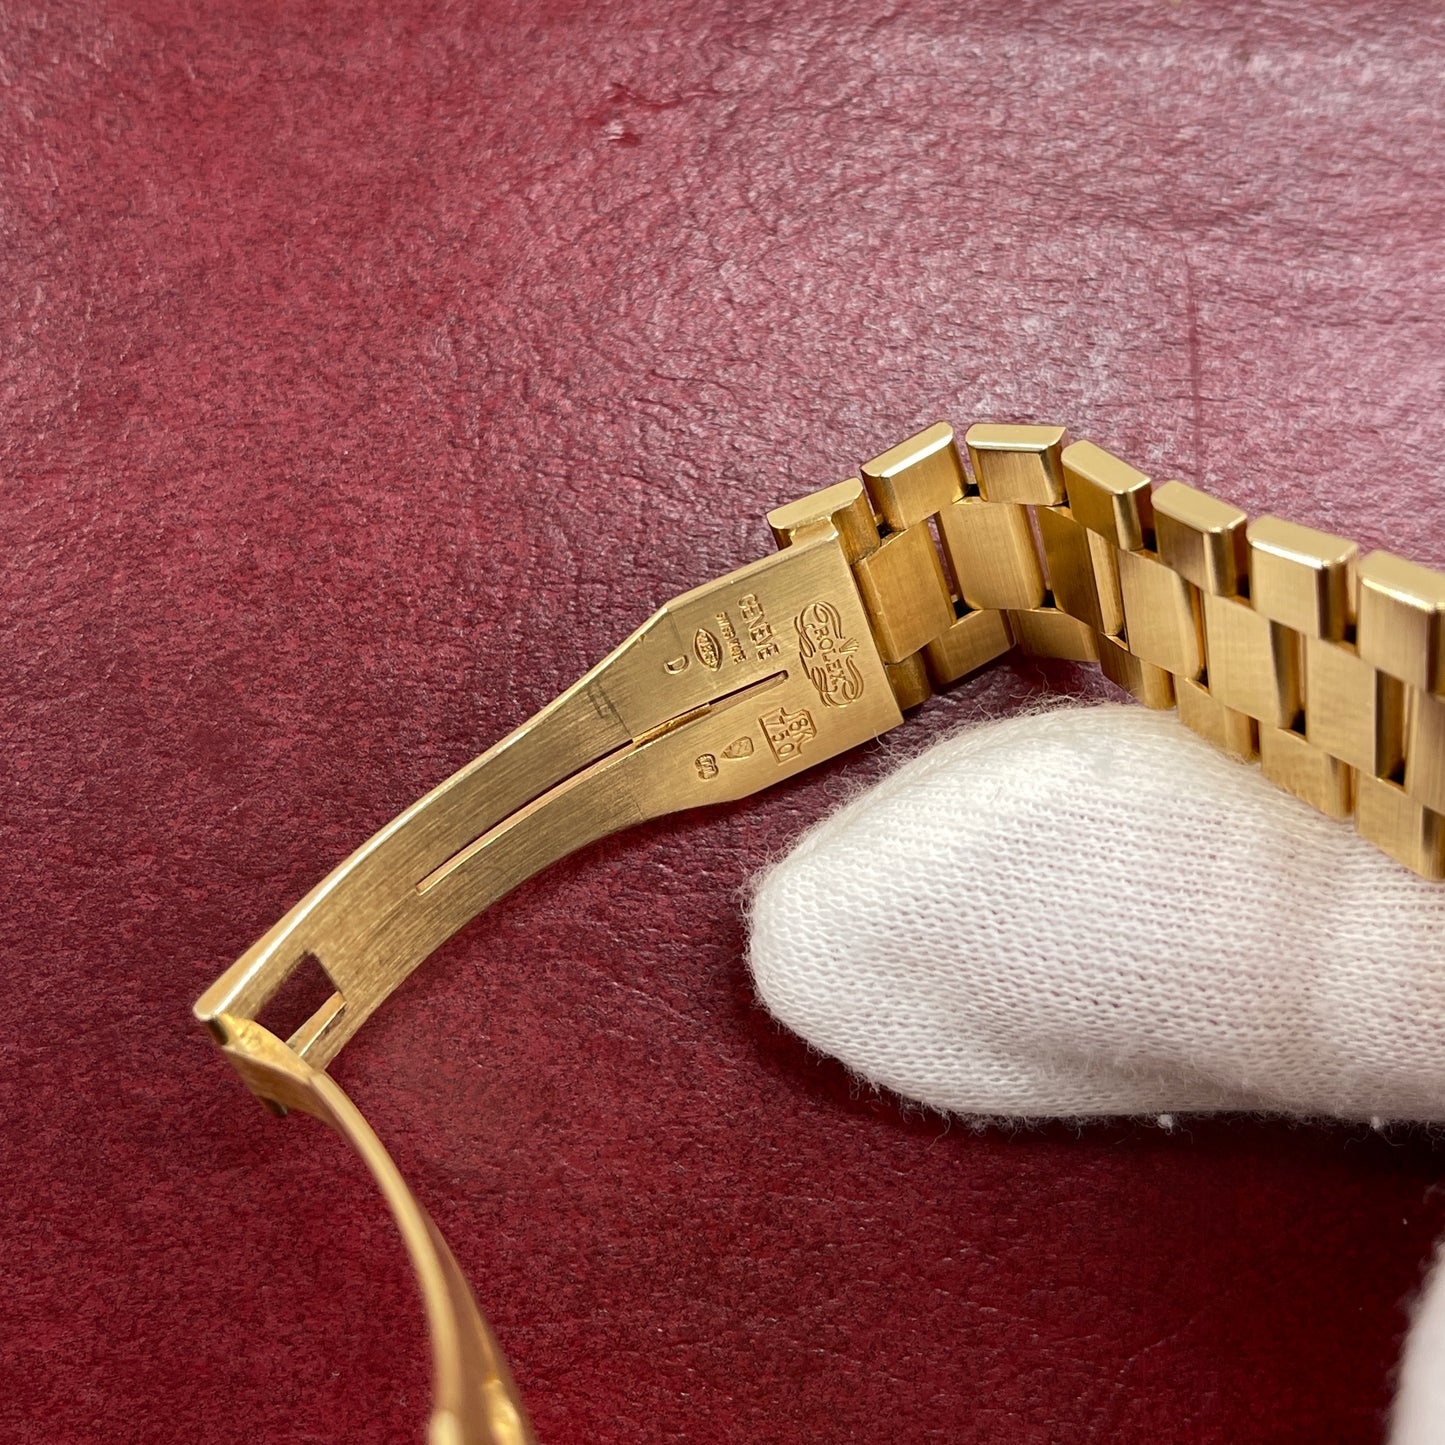 1981 Vintage Rolex Oysterquartz President 19018 Day Date 18K Yellow Gold Wristwatch - Hashtag Watch Company